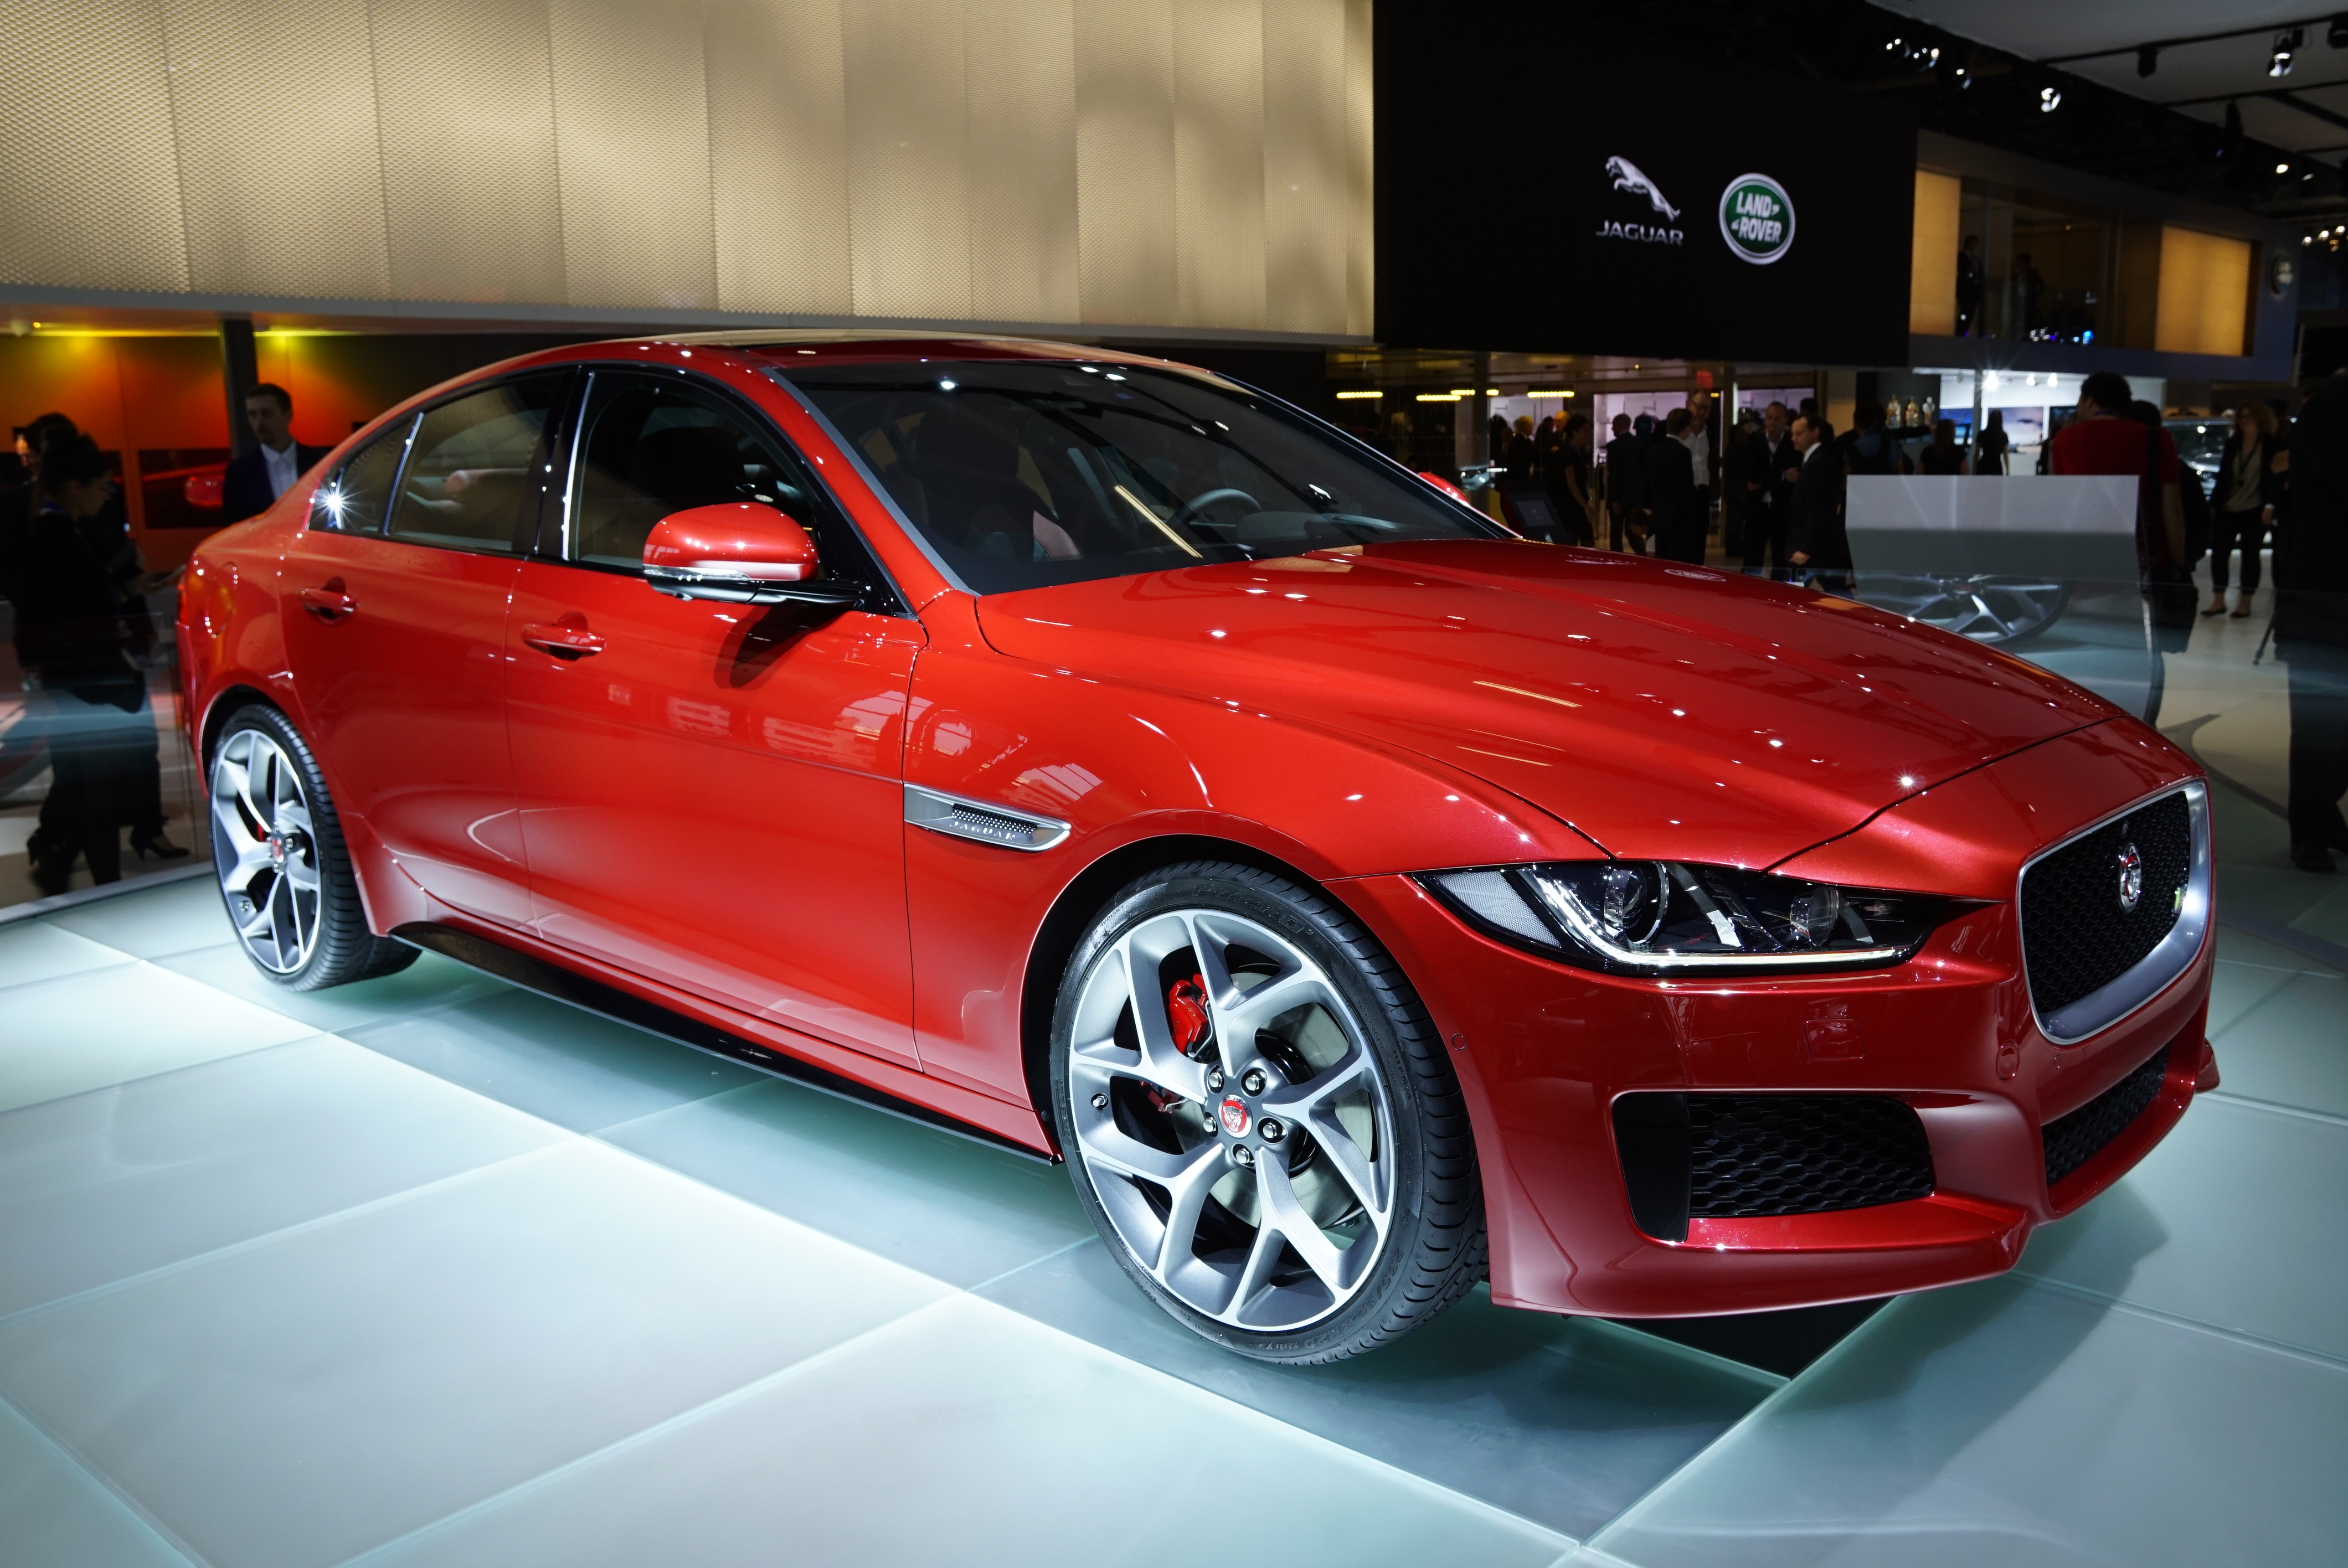 New Jaguar XE at 2014 Paris Motor Show